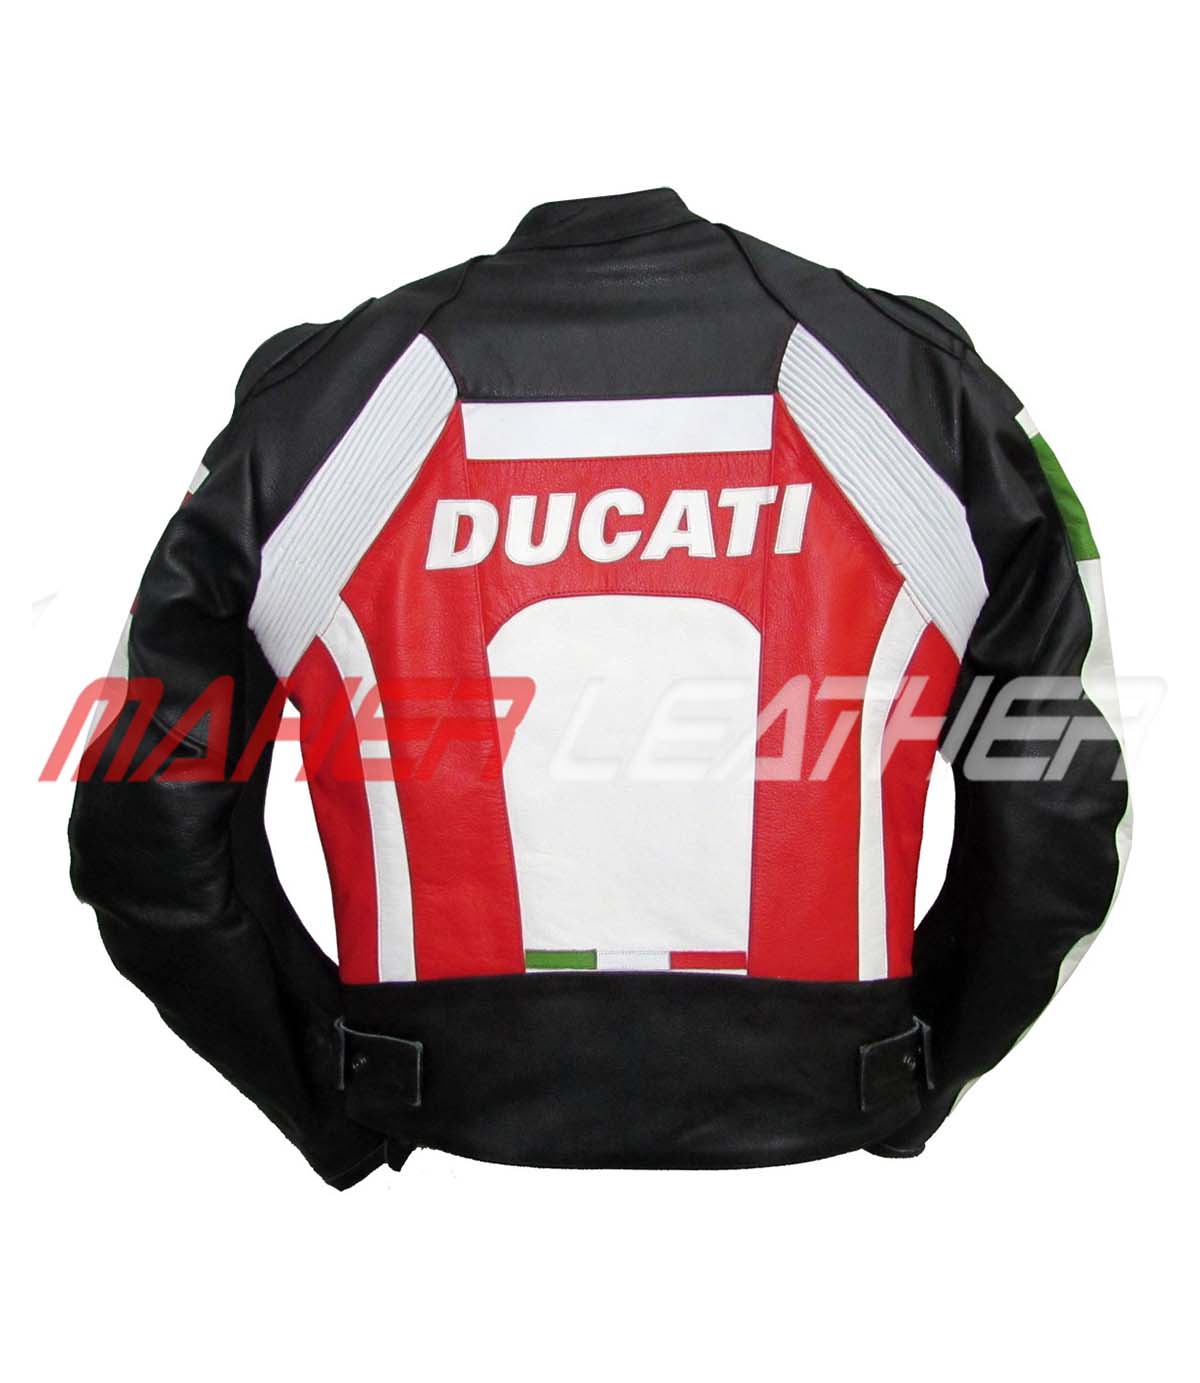 Back side of Ducati motorcycle jacket